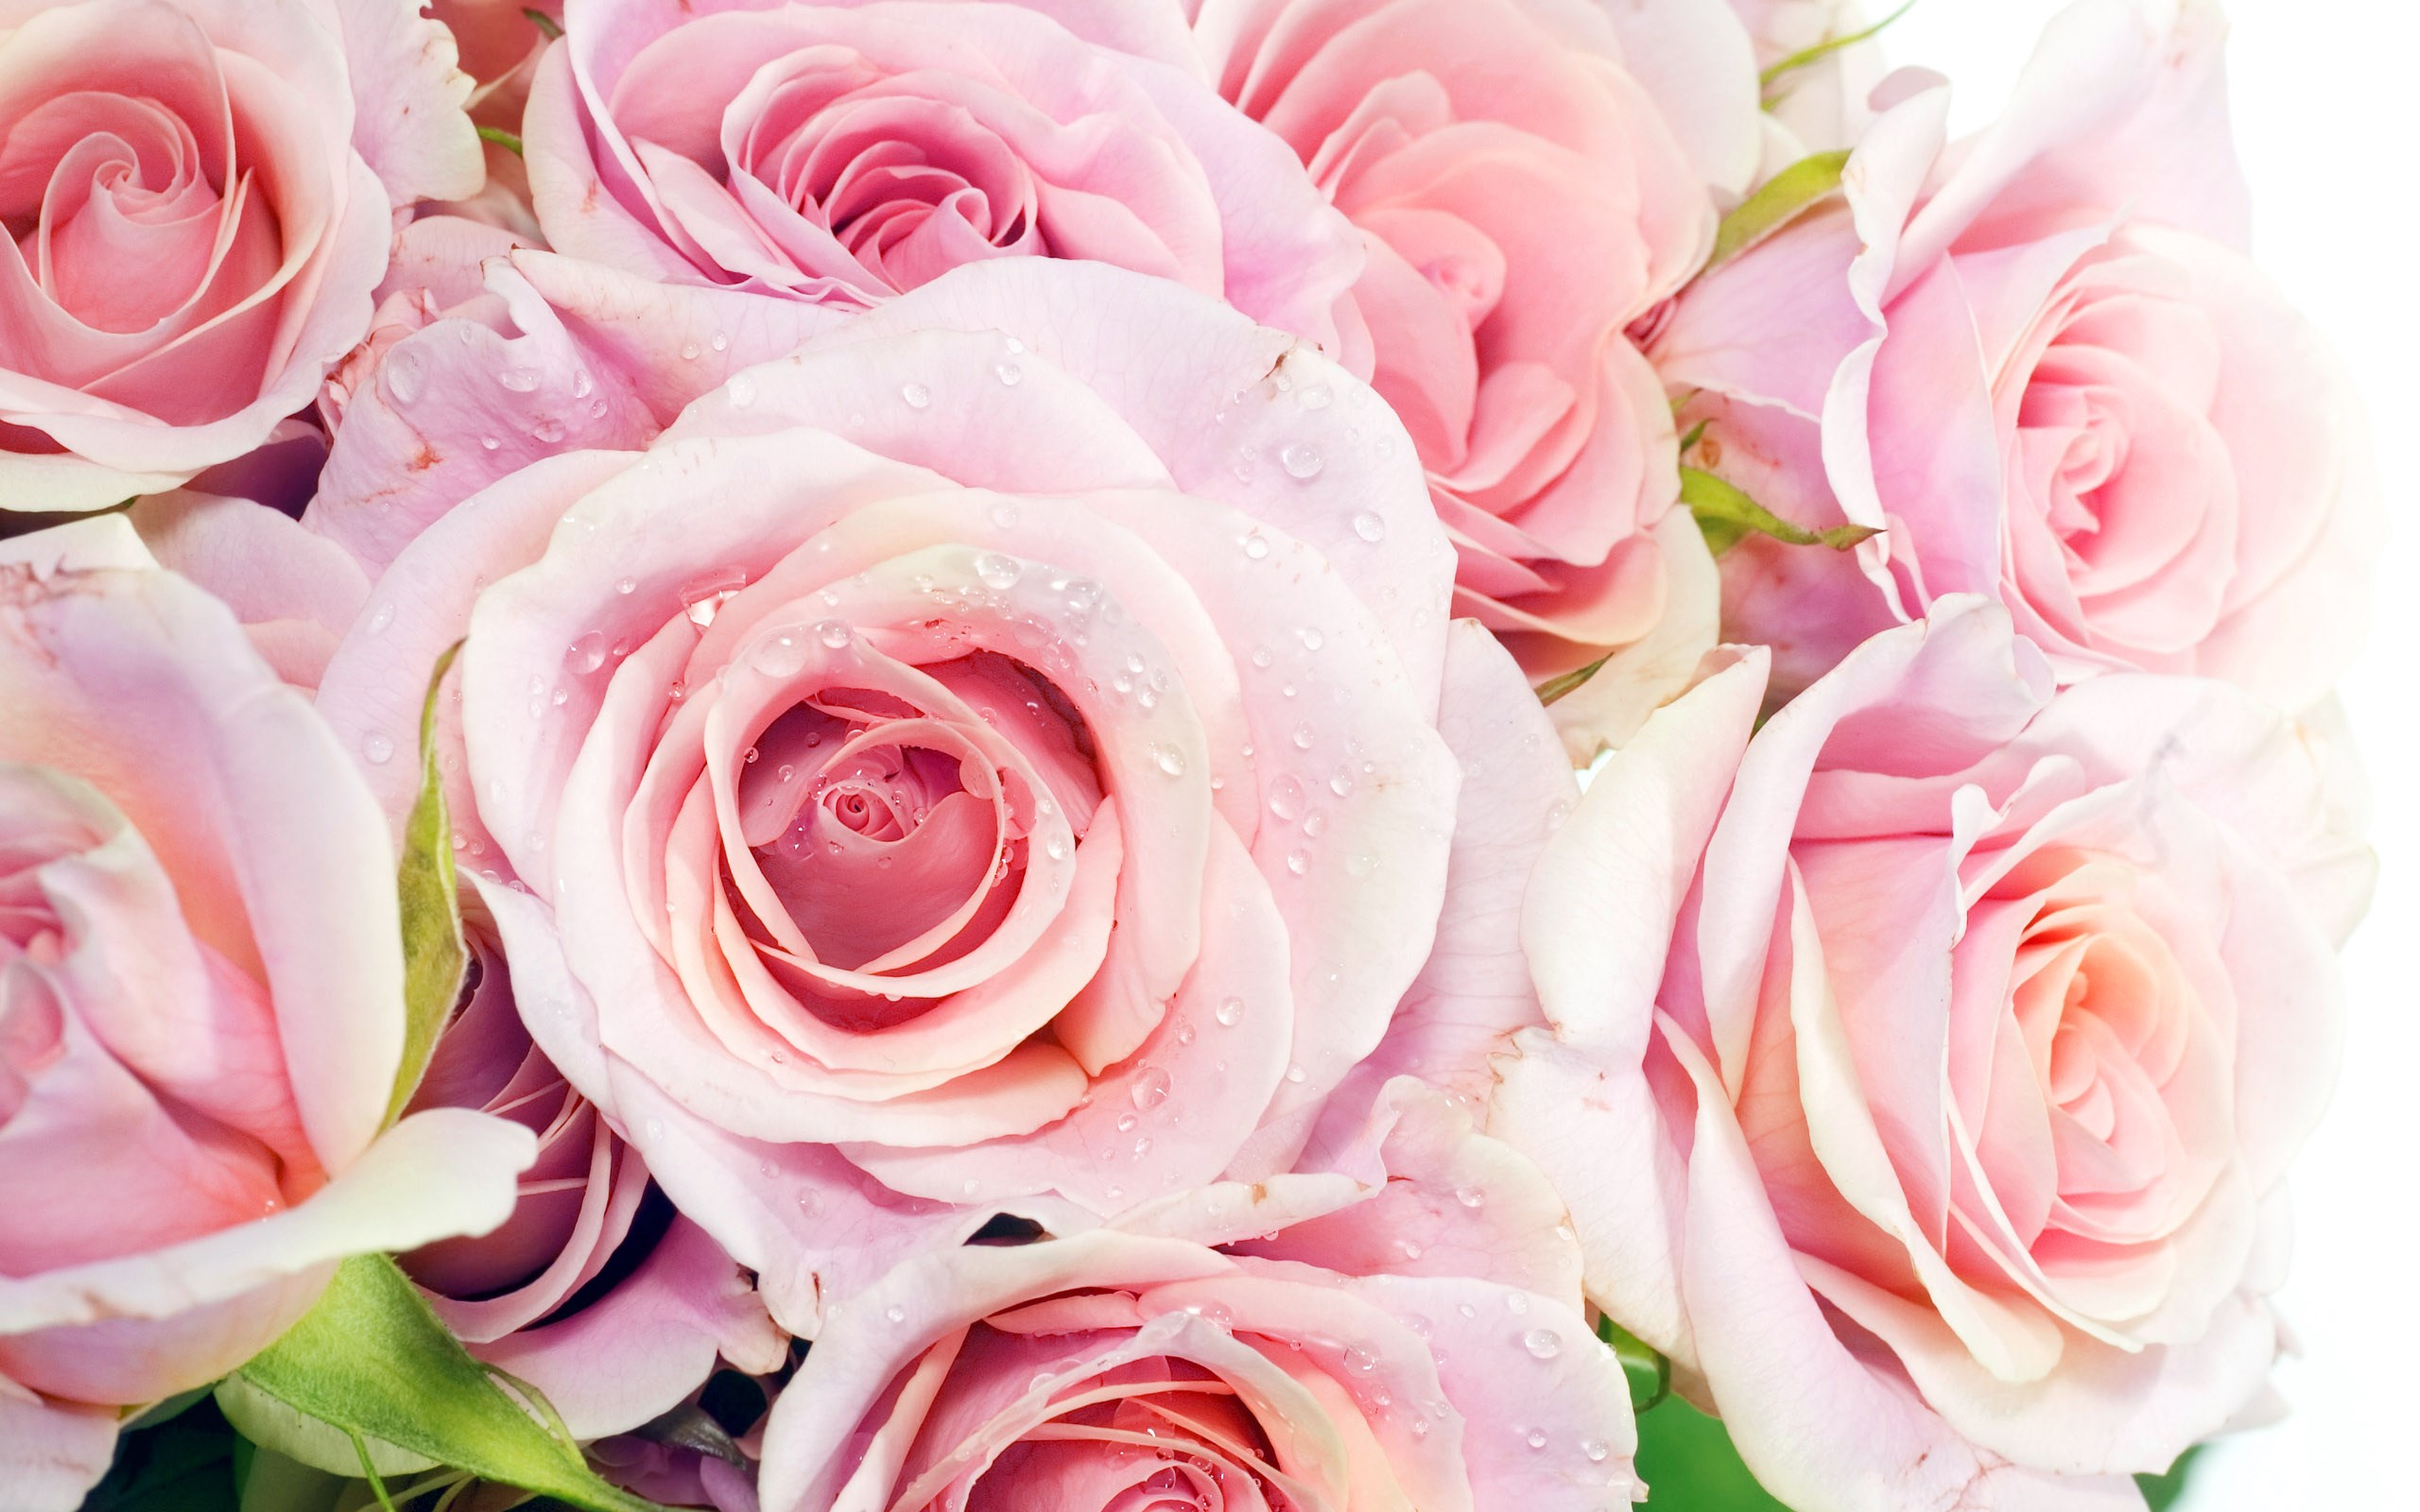 Pink Rose Petals Water Drops Desktop Hd Wallpaper For Pc Tablet And Mobile  Download 3840x2400  Wallpapers13com